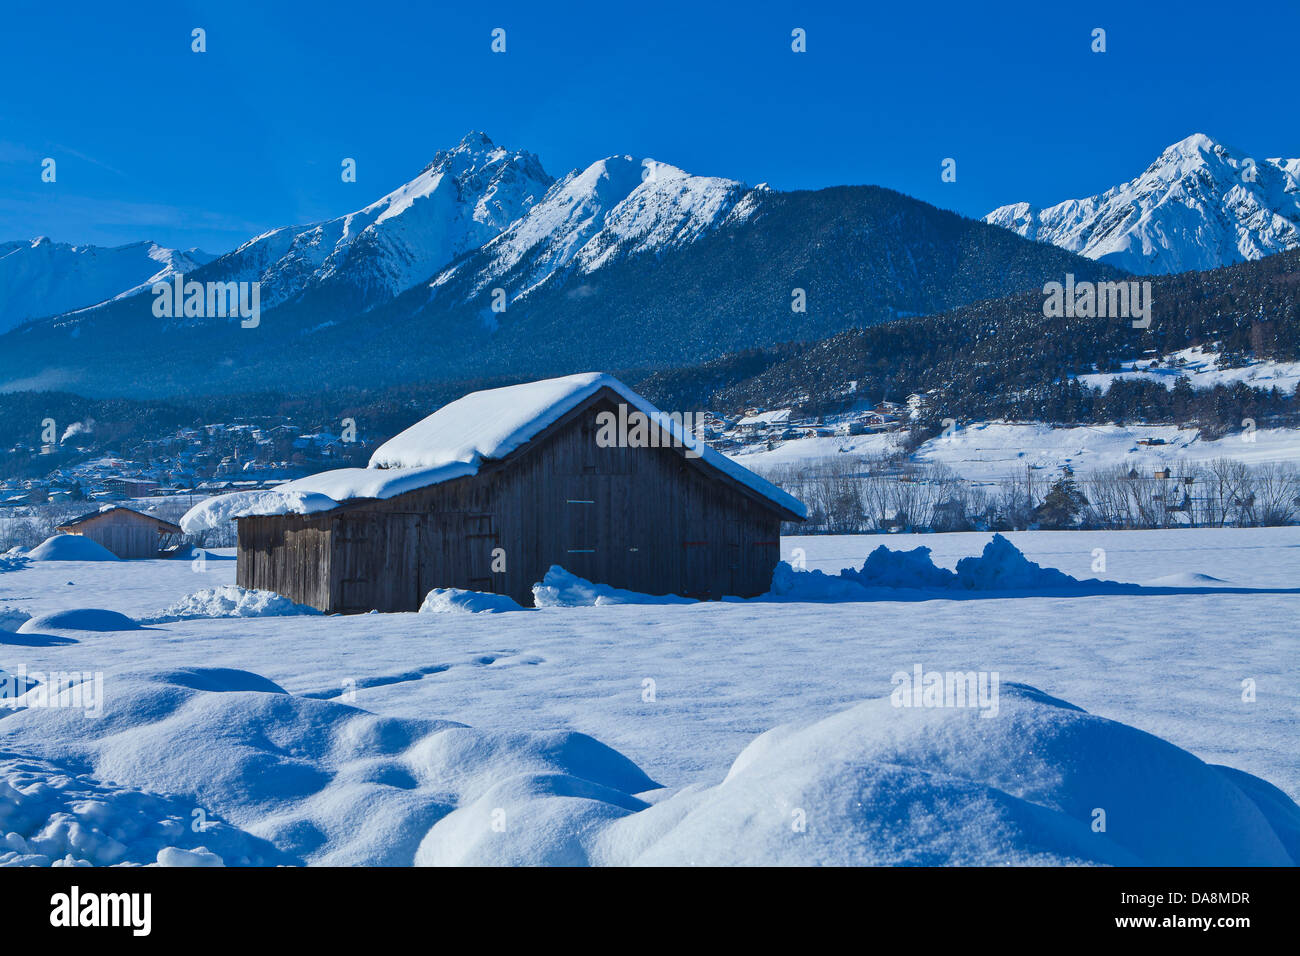 Austria, Europe, Tyrol, Gurgltal, Terrenz, Imst, winter, snow, mountains, Lechtal, Lech valley, Alps, Platteinspitze, Stadel, ha Stock Photo